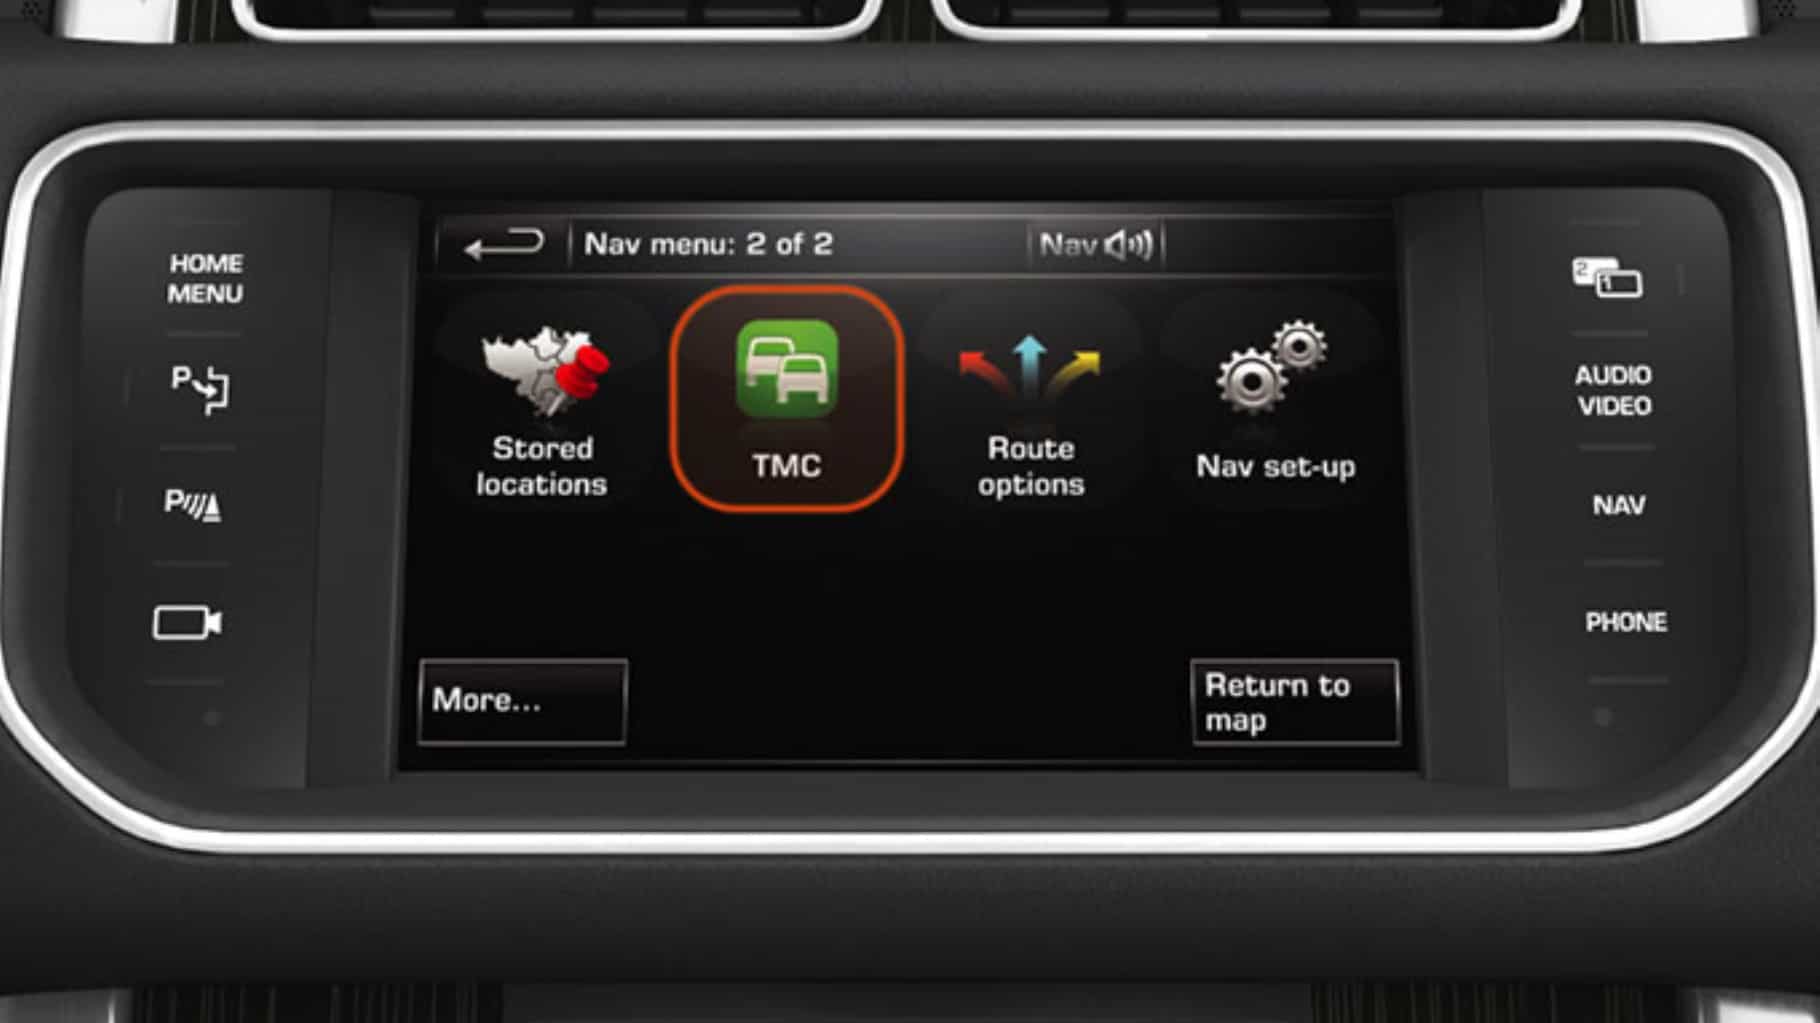 Navigation - Traffic Message Channel (TMC)